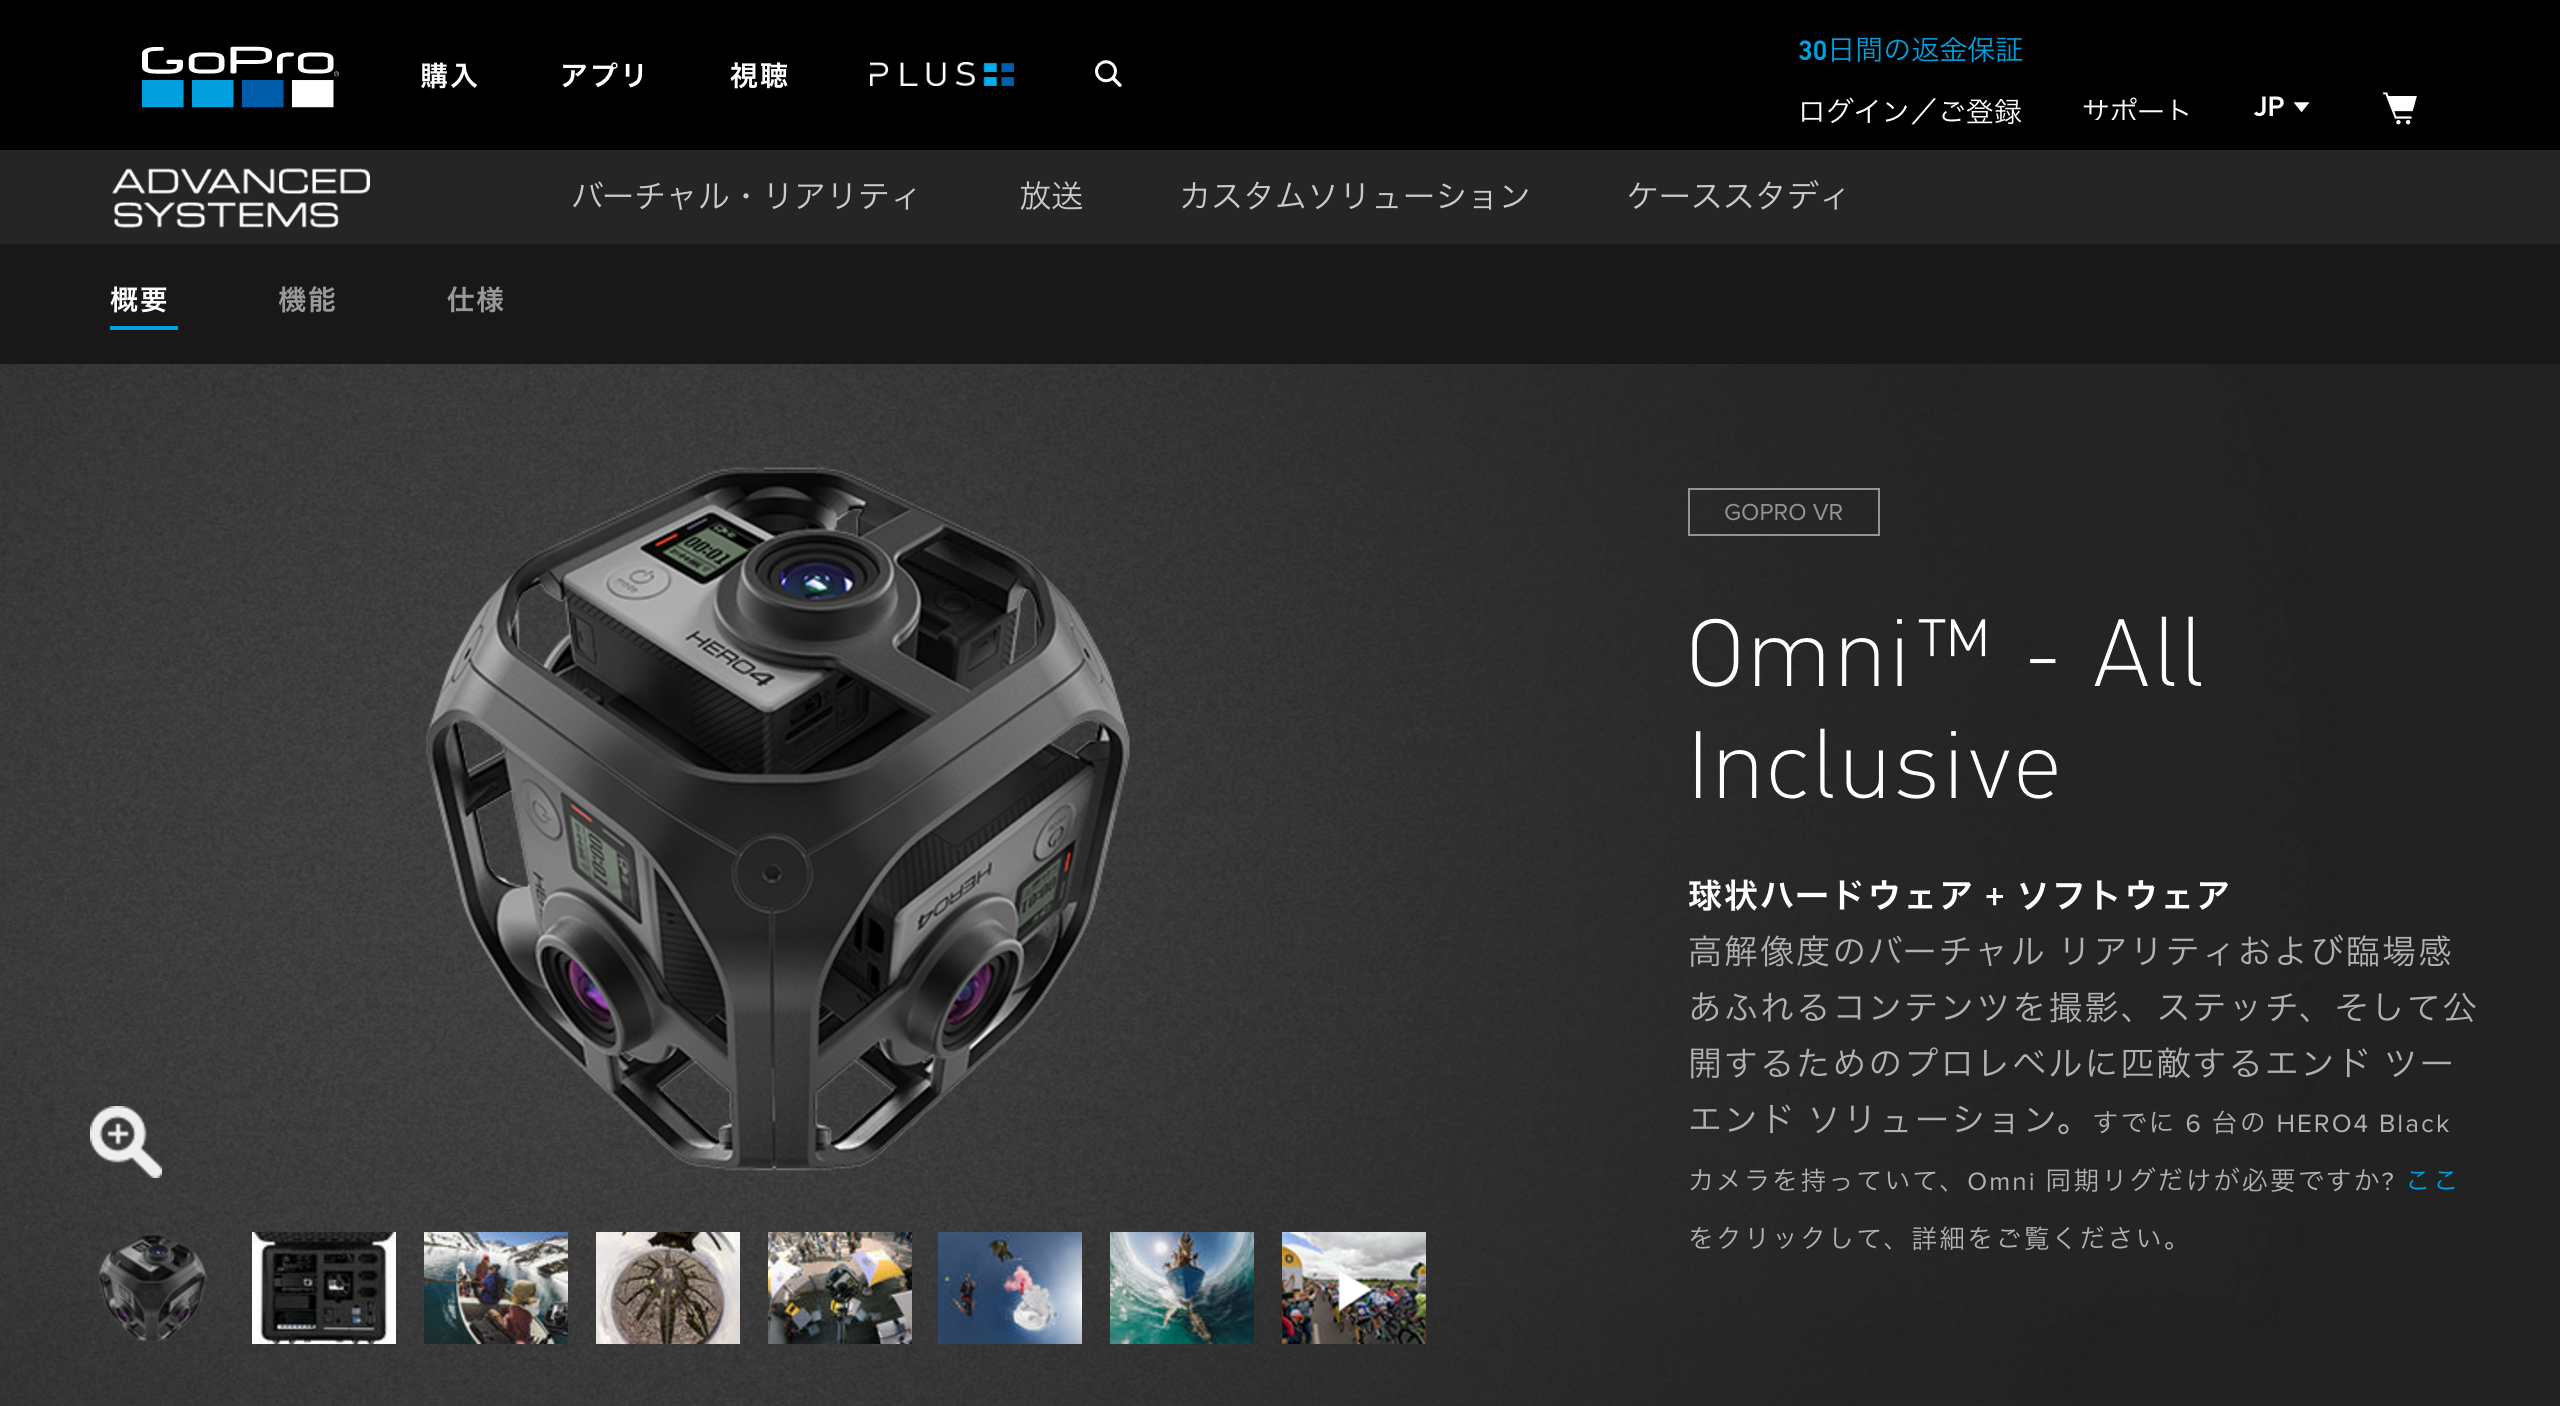 FireShot Capture 241 - GoPro - Omni™ - All Inclusive - 6面同期カ_ - https___jp.shop.gopro.com_APAC_vr-